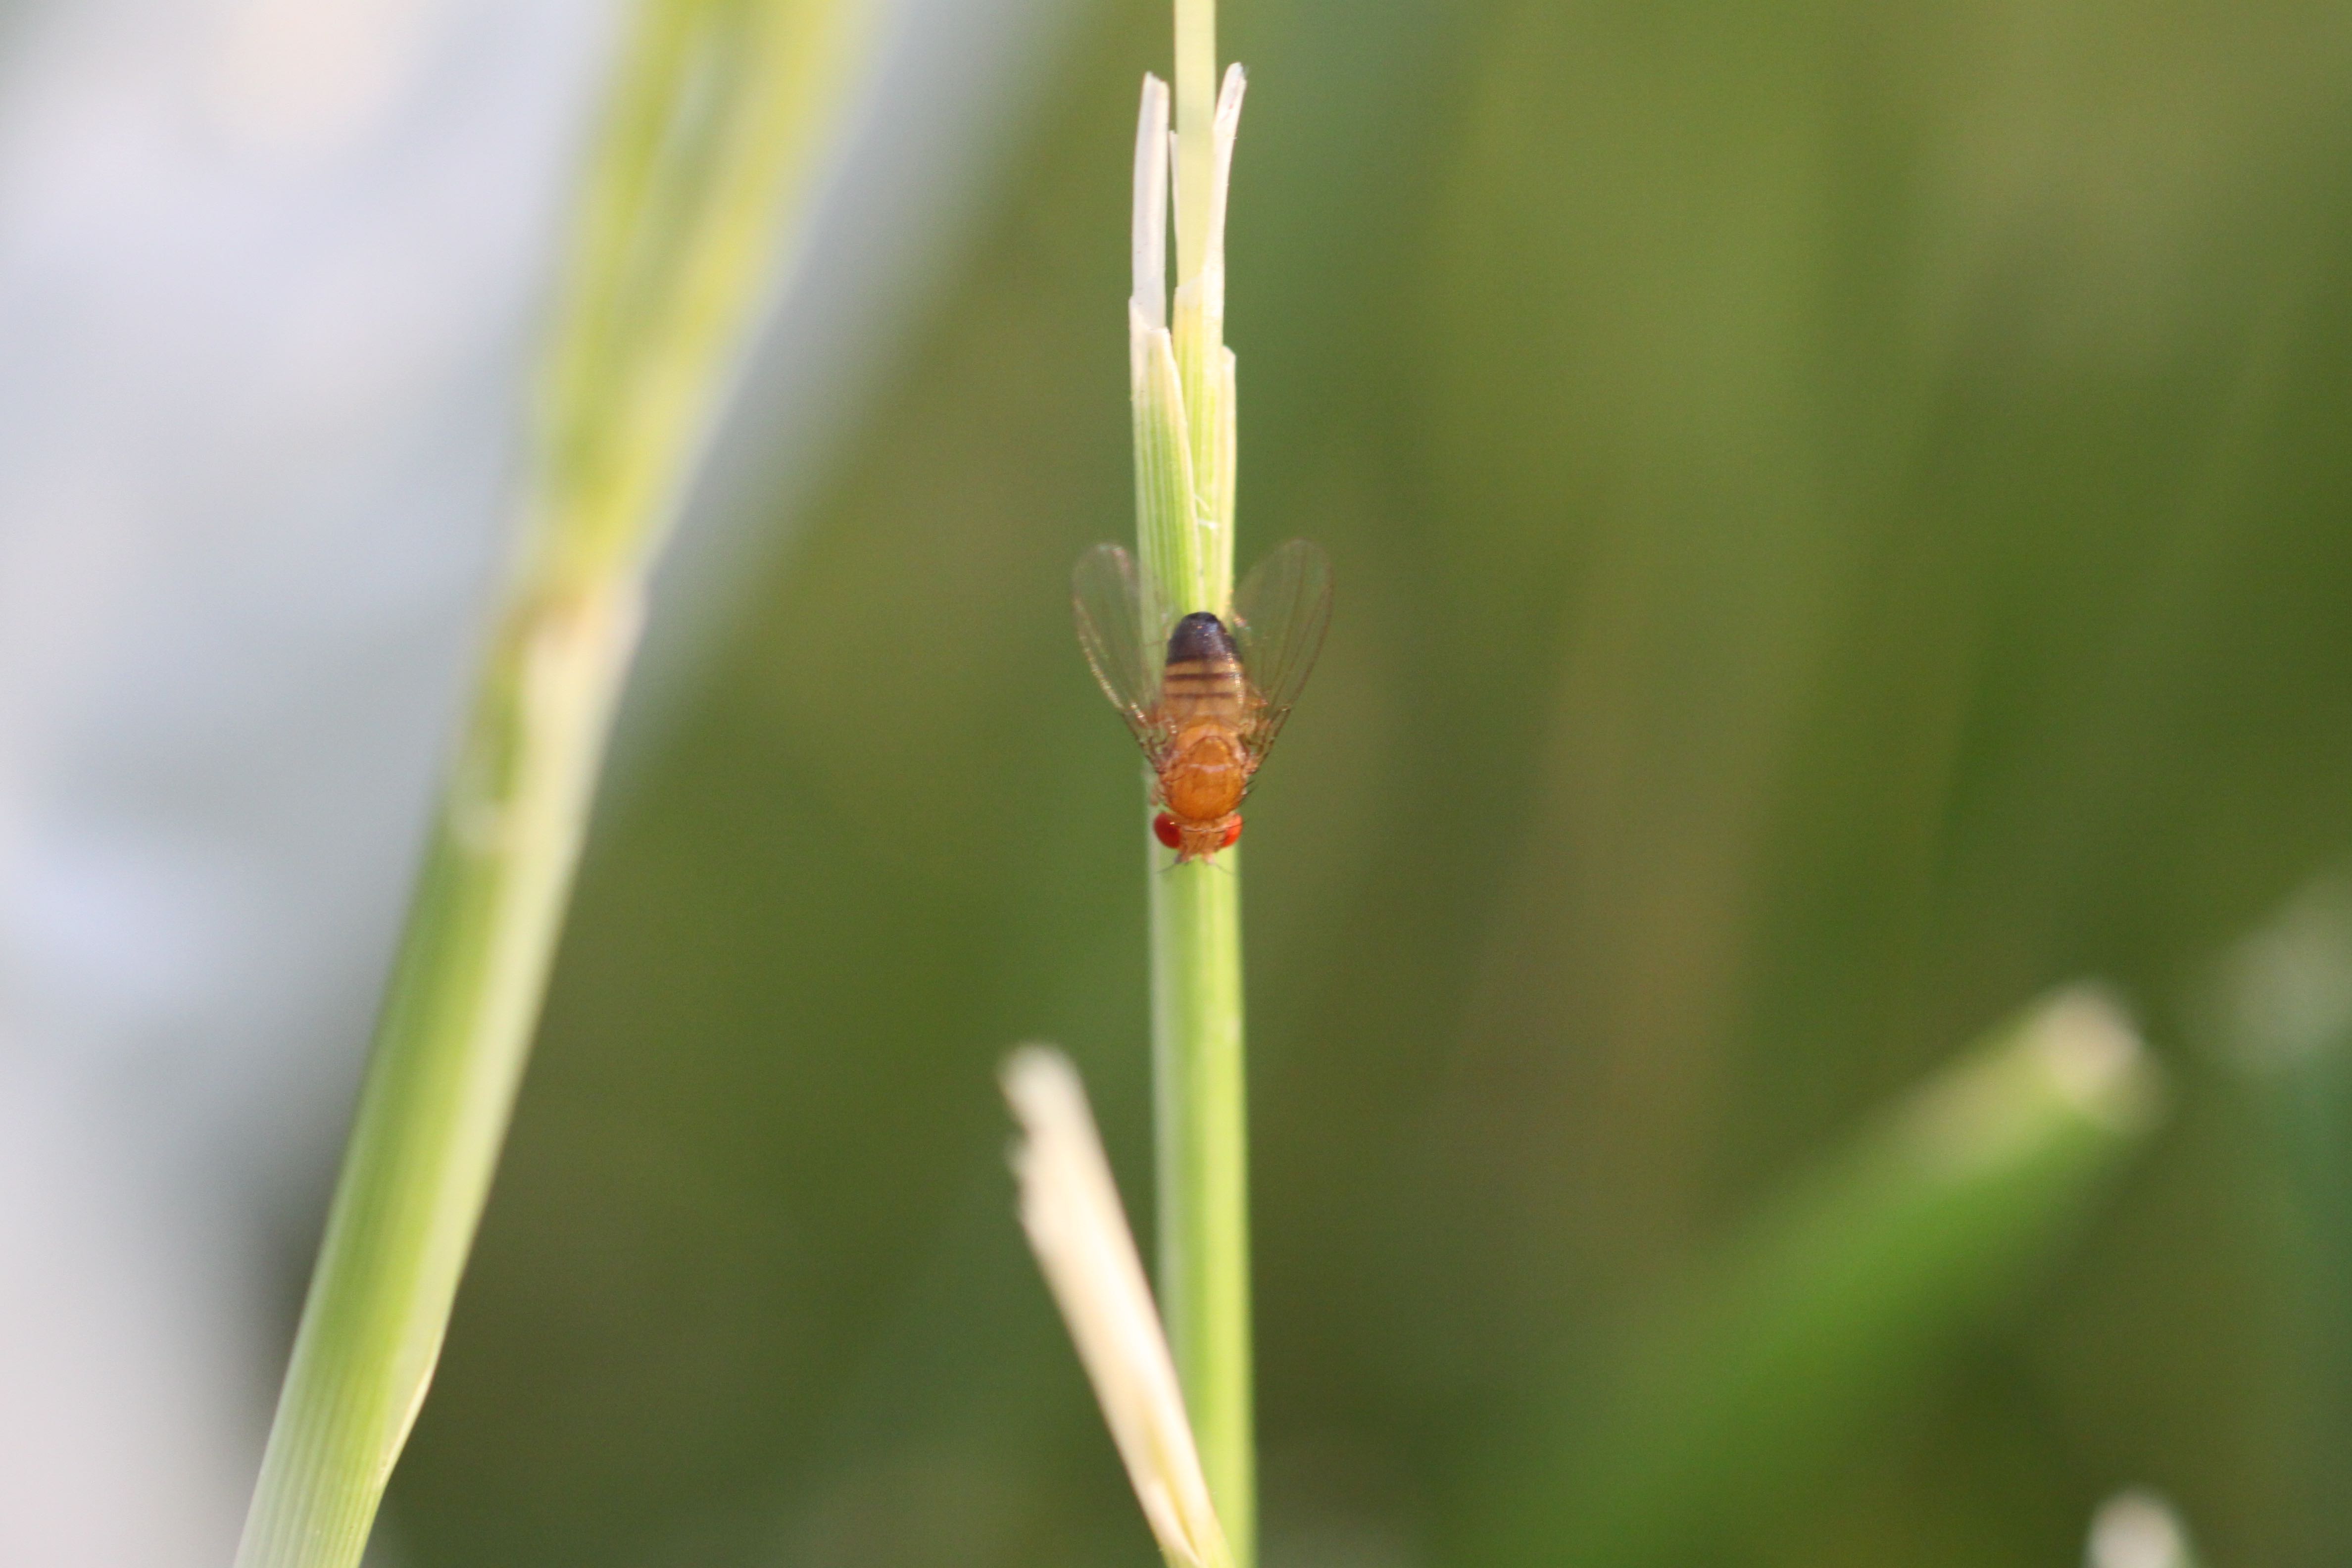 fruit fly close-up on a piece of vegetation